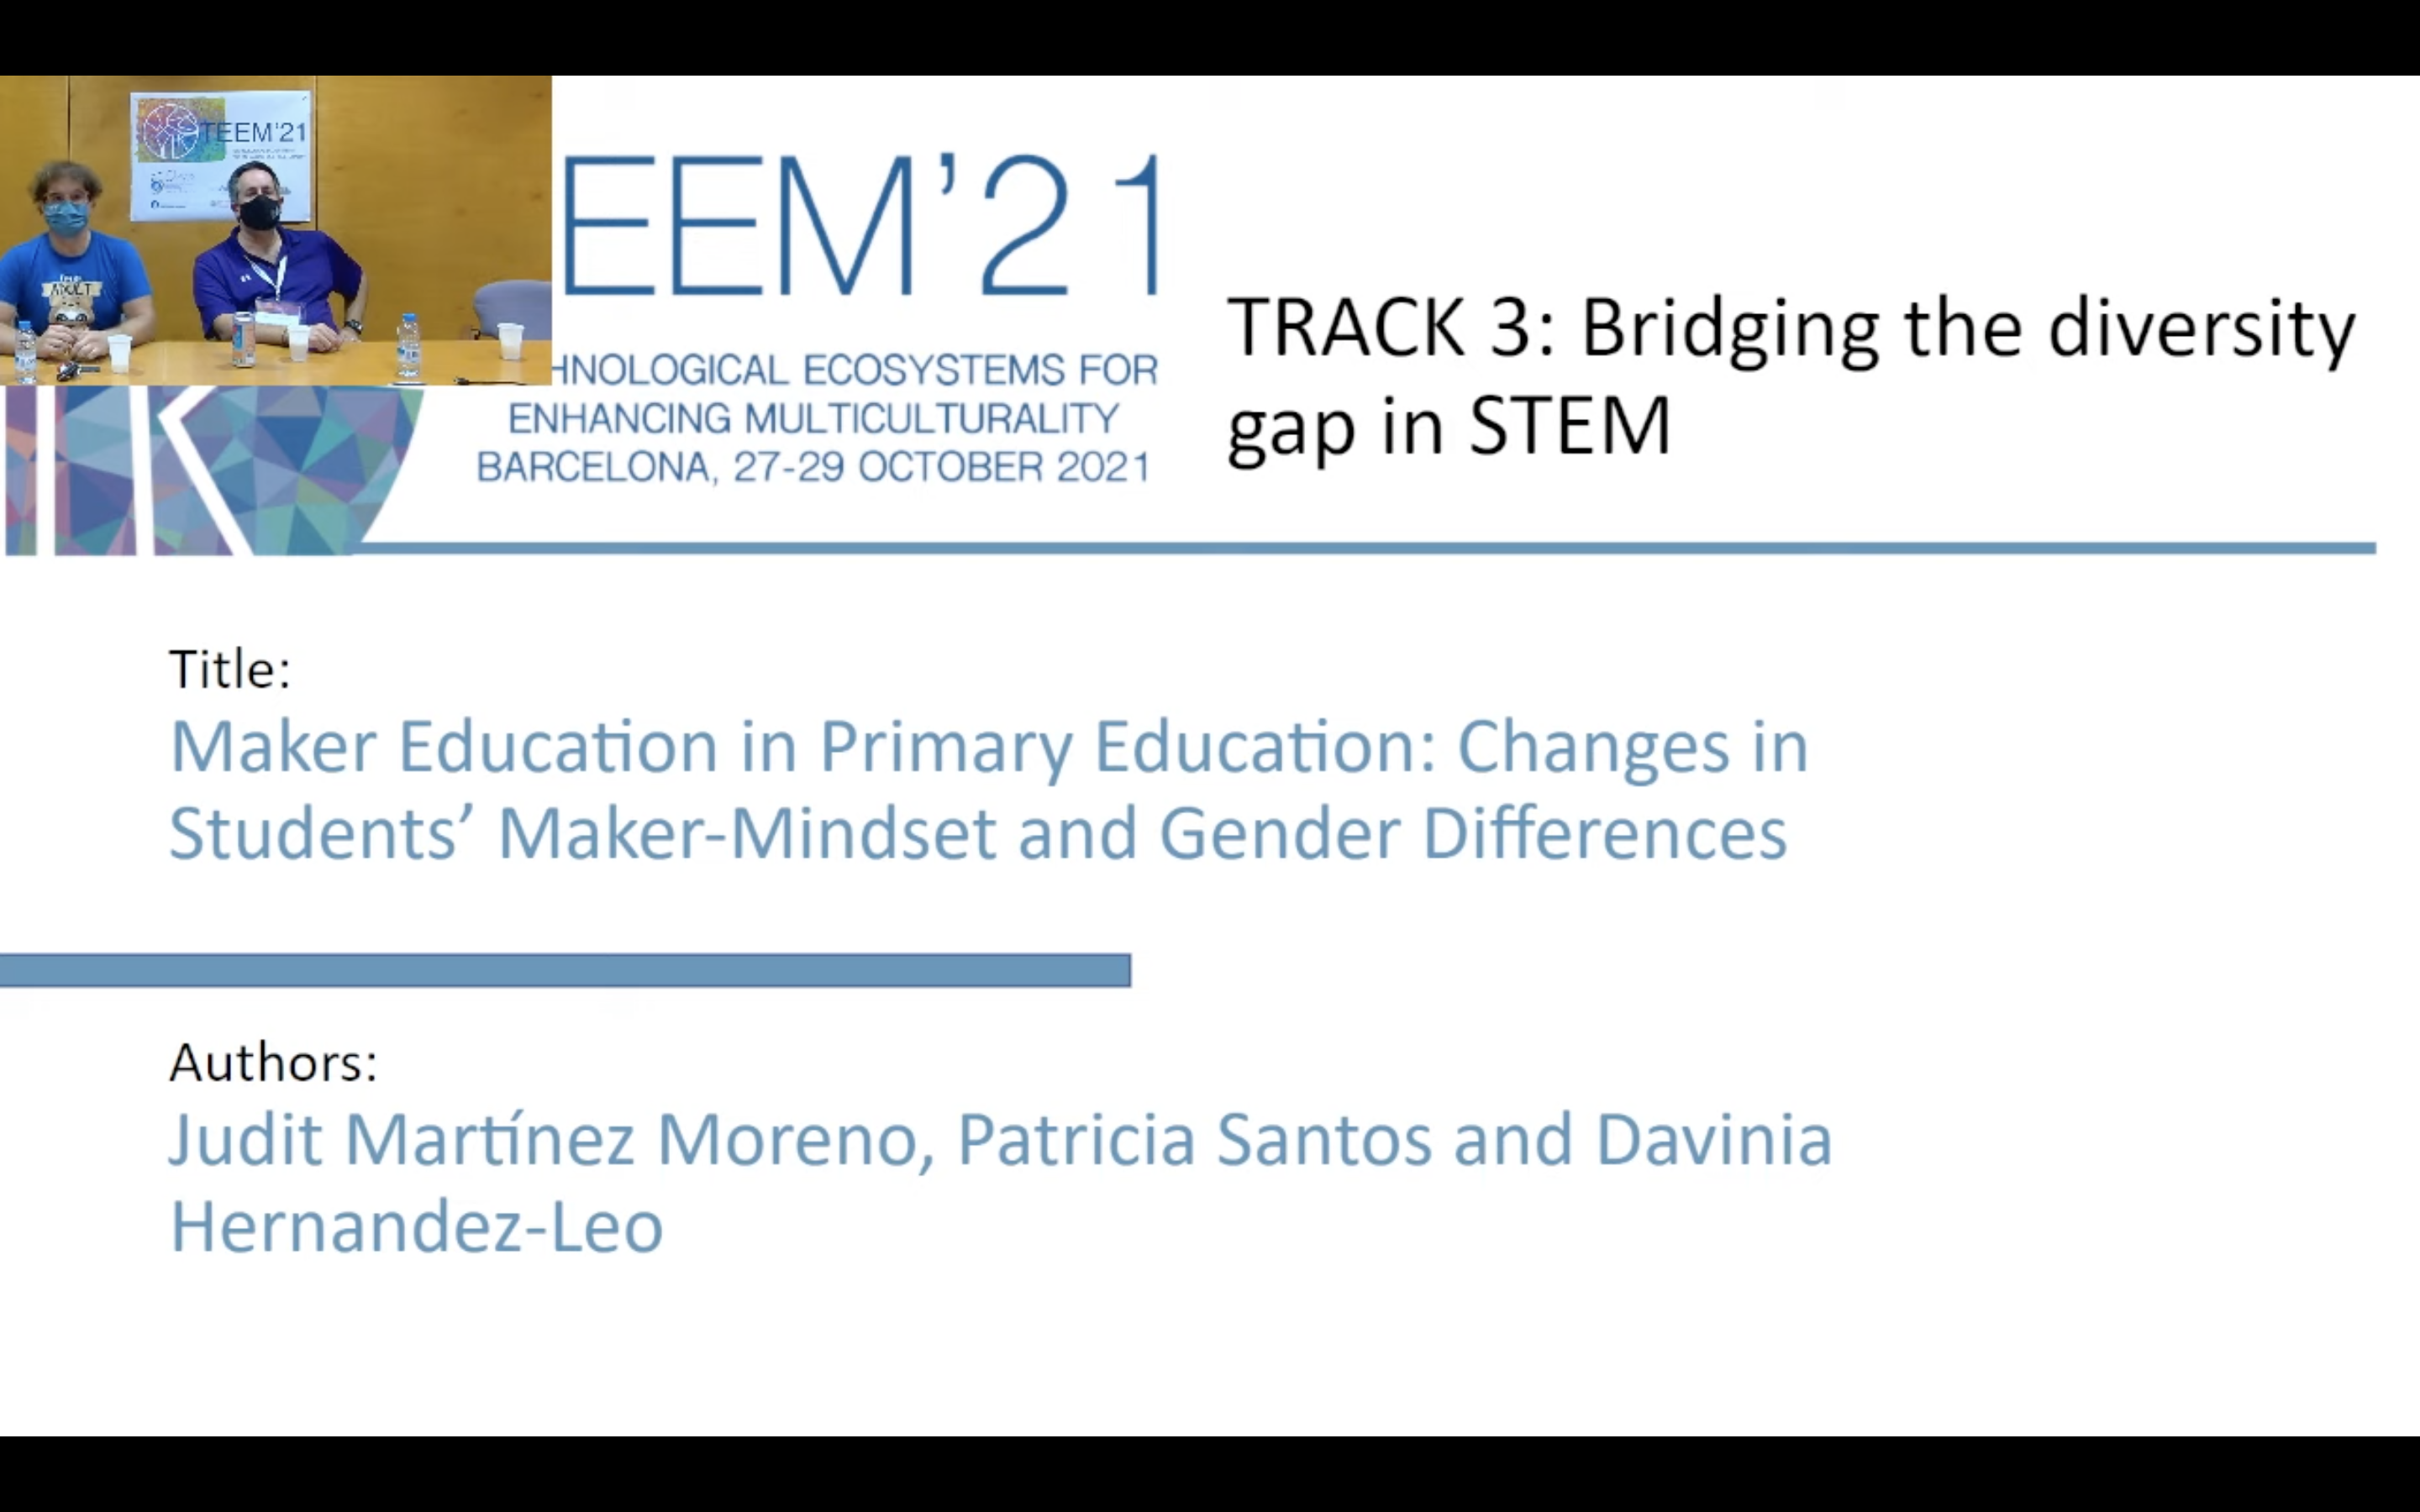 Best paper award TEEM Track 3 ' 'Bridging the diversity gap in STEM´